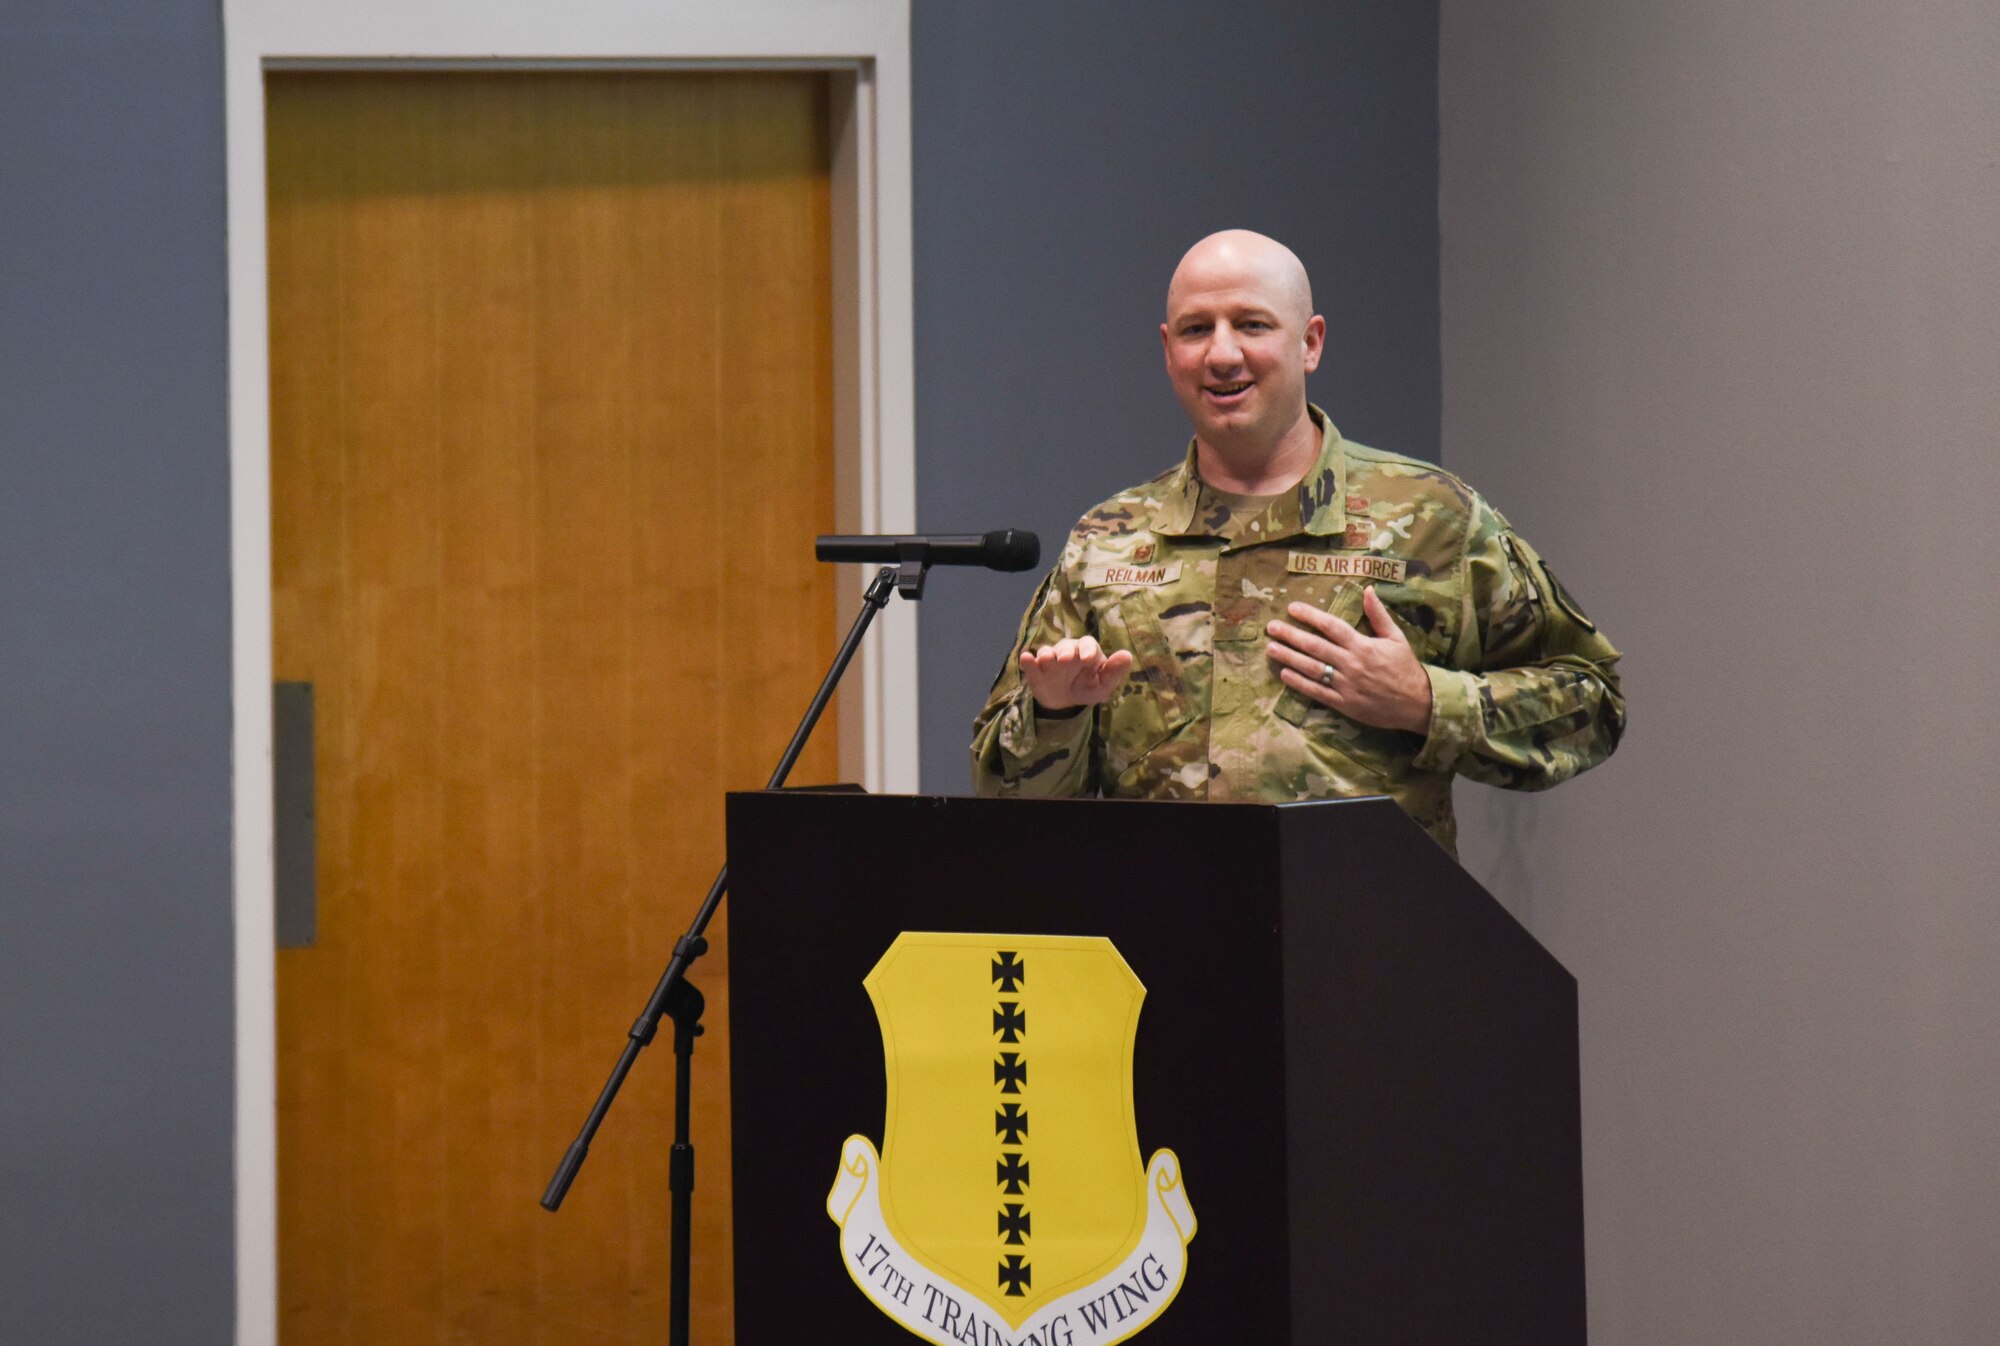 17th Training Wing commander Matthew Reilman speaks at an event